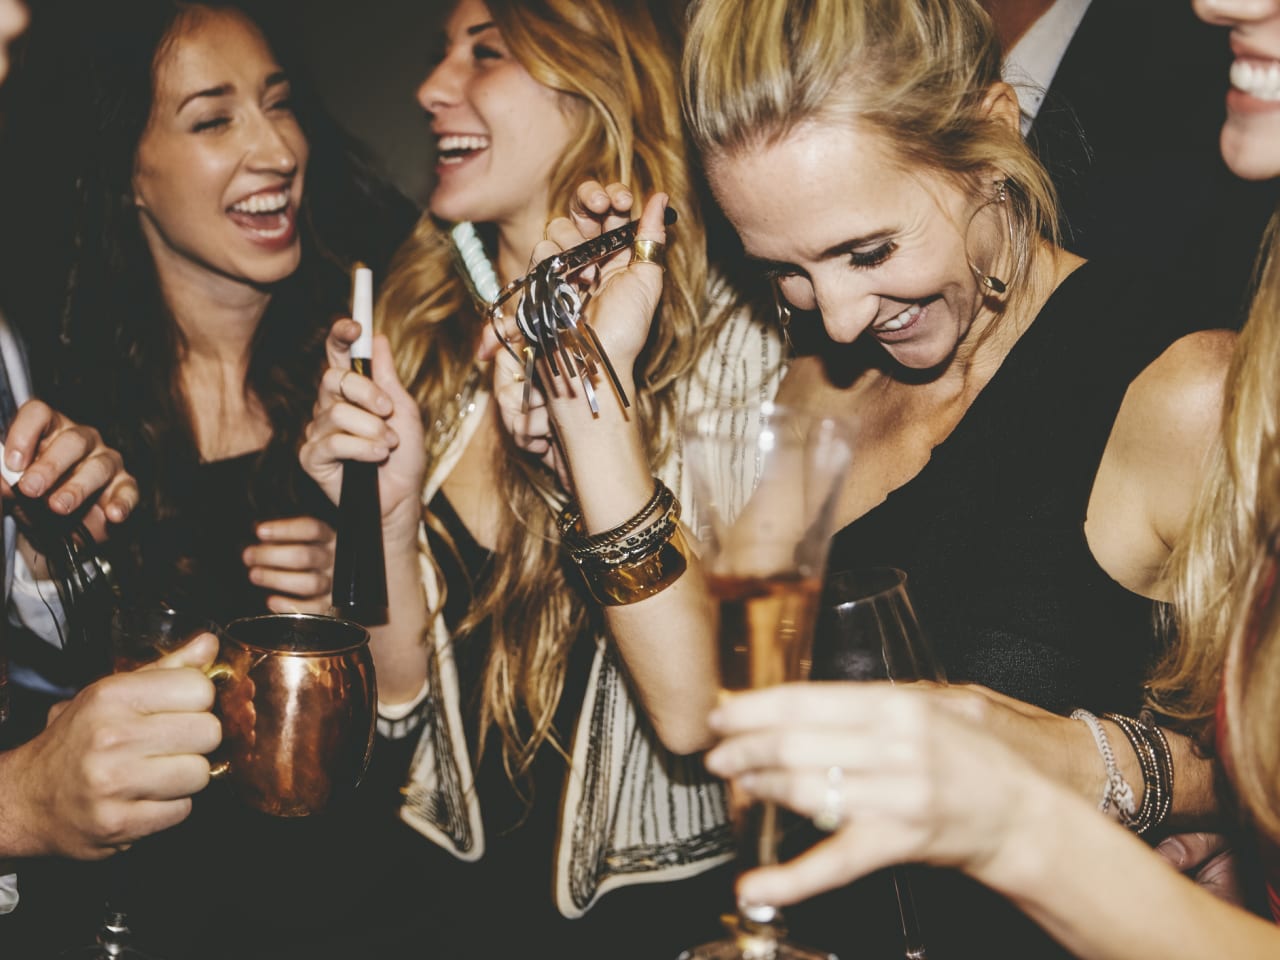 Frauen haben Spaß im Club © The Good Brigade/DigitalVision via Getty Images